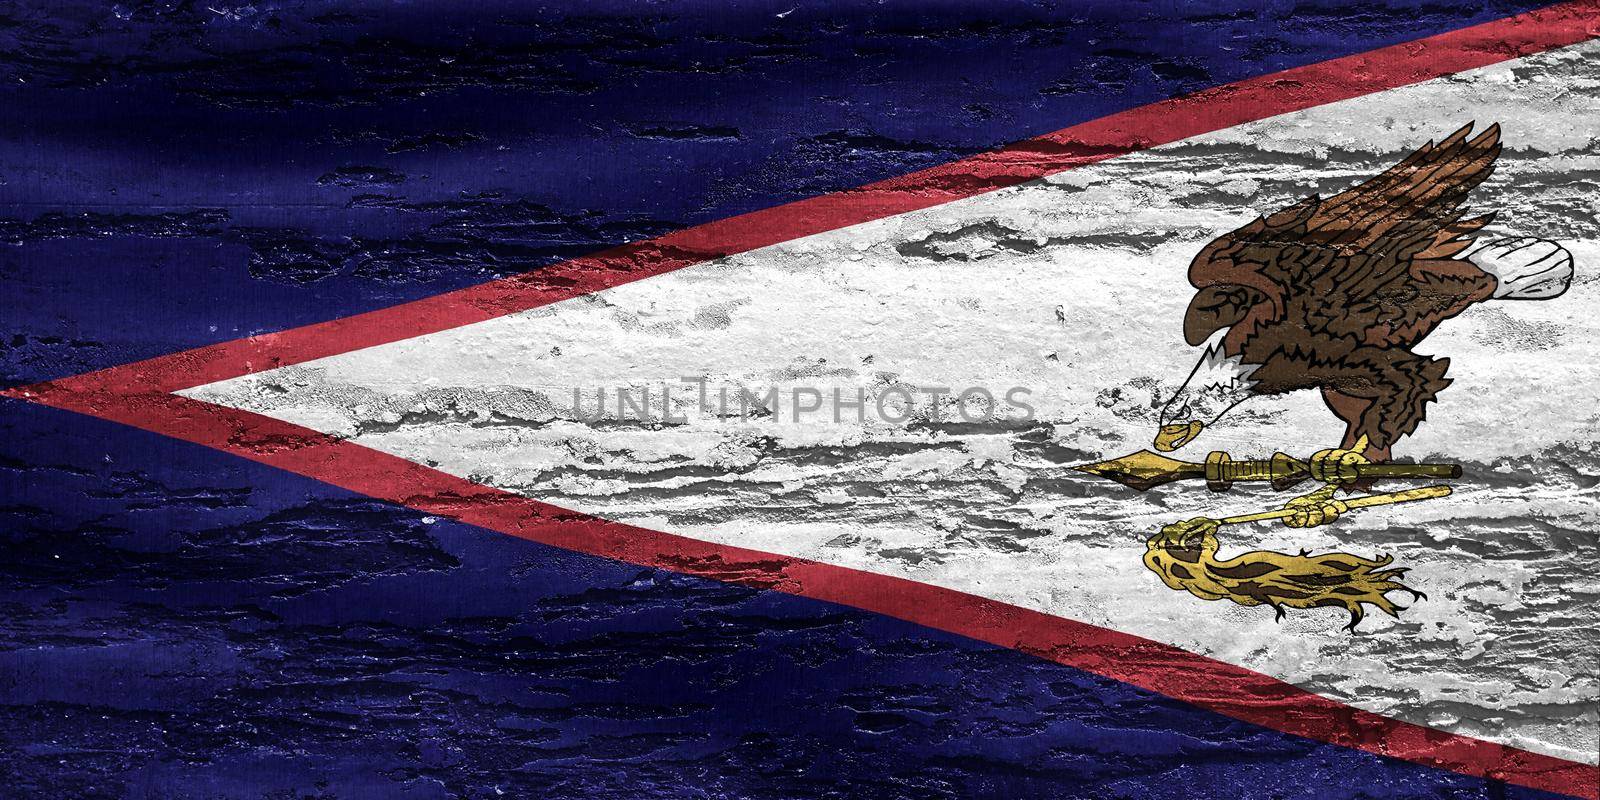 American Samoa flag - realistic waving fabric flag by MP_foto71